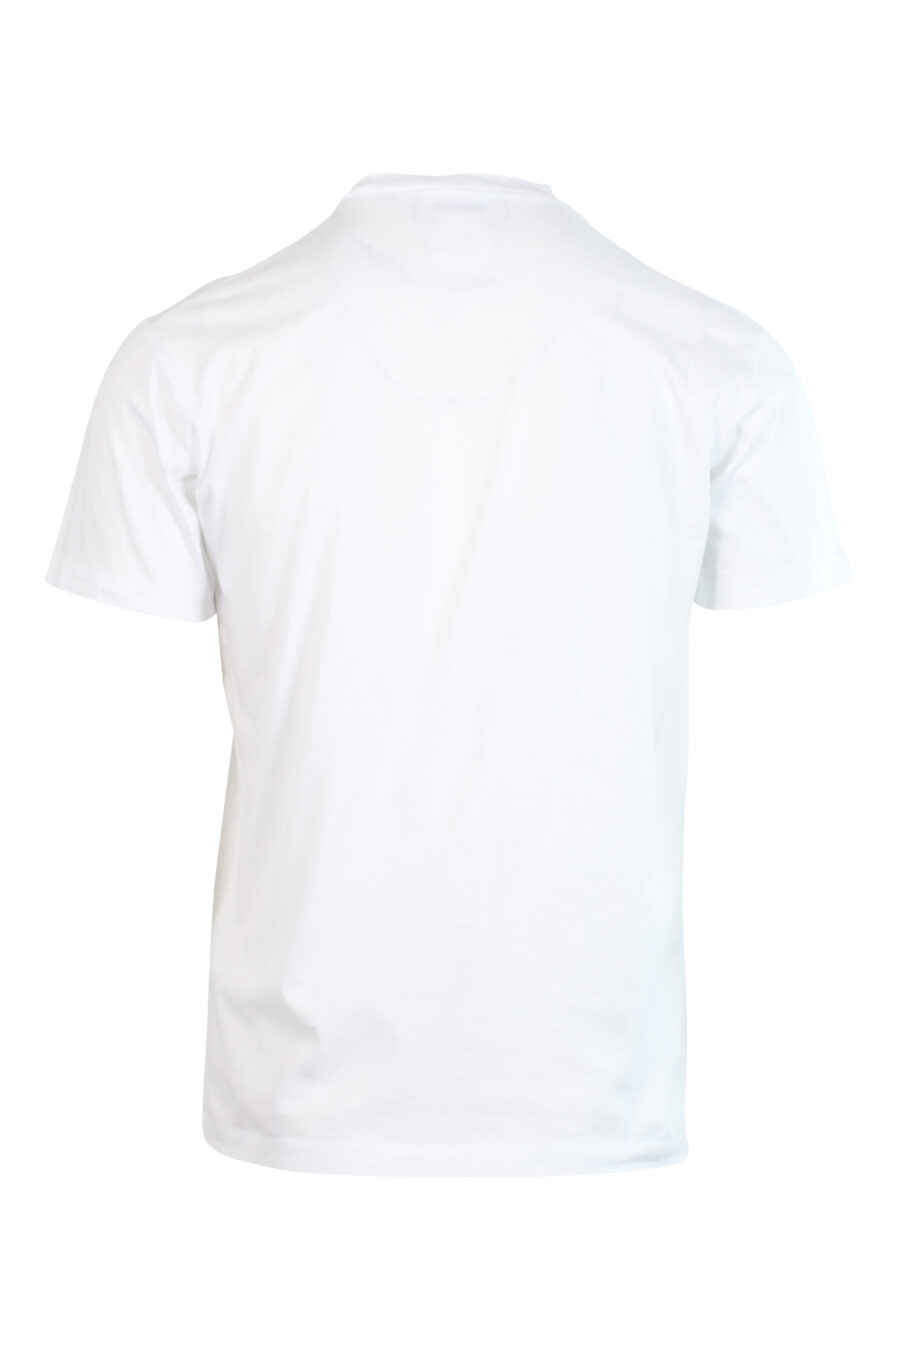 White T-shirt with monochrome logo - 8052134946381 2